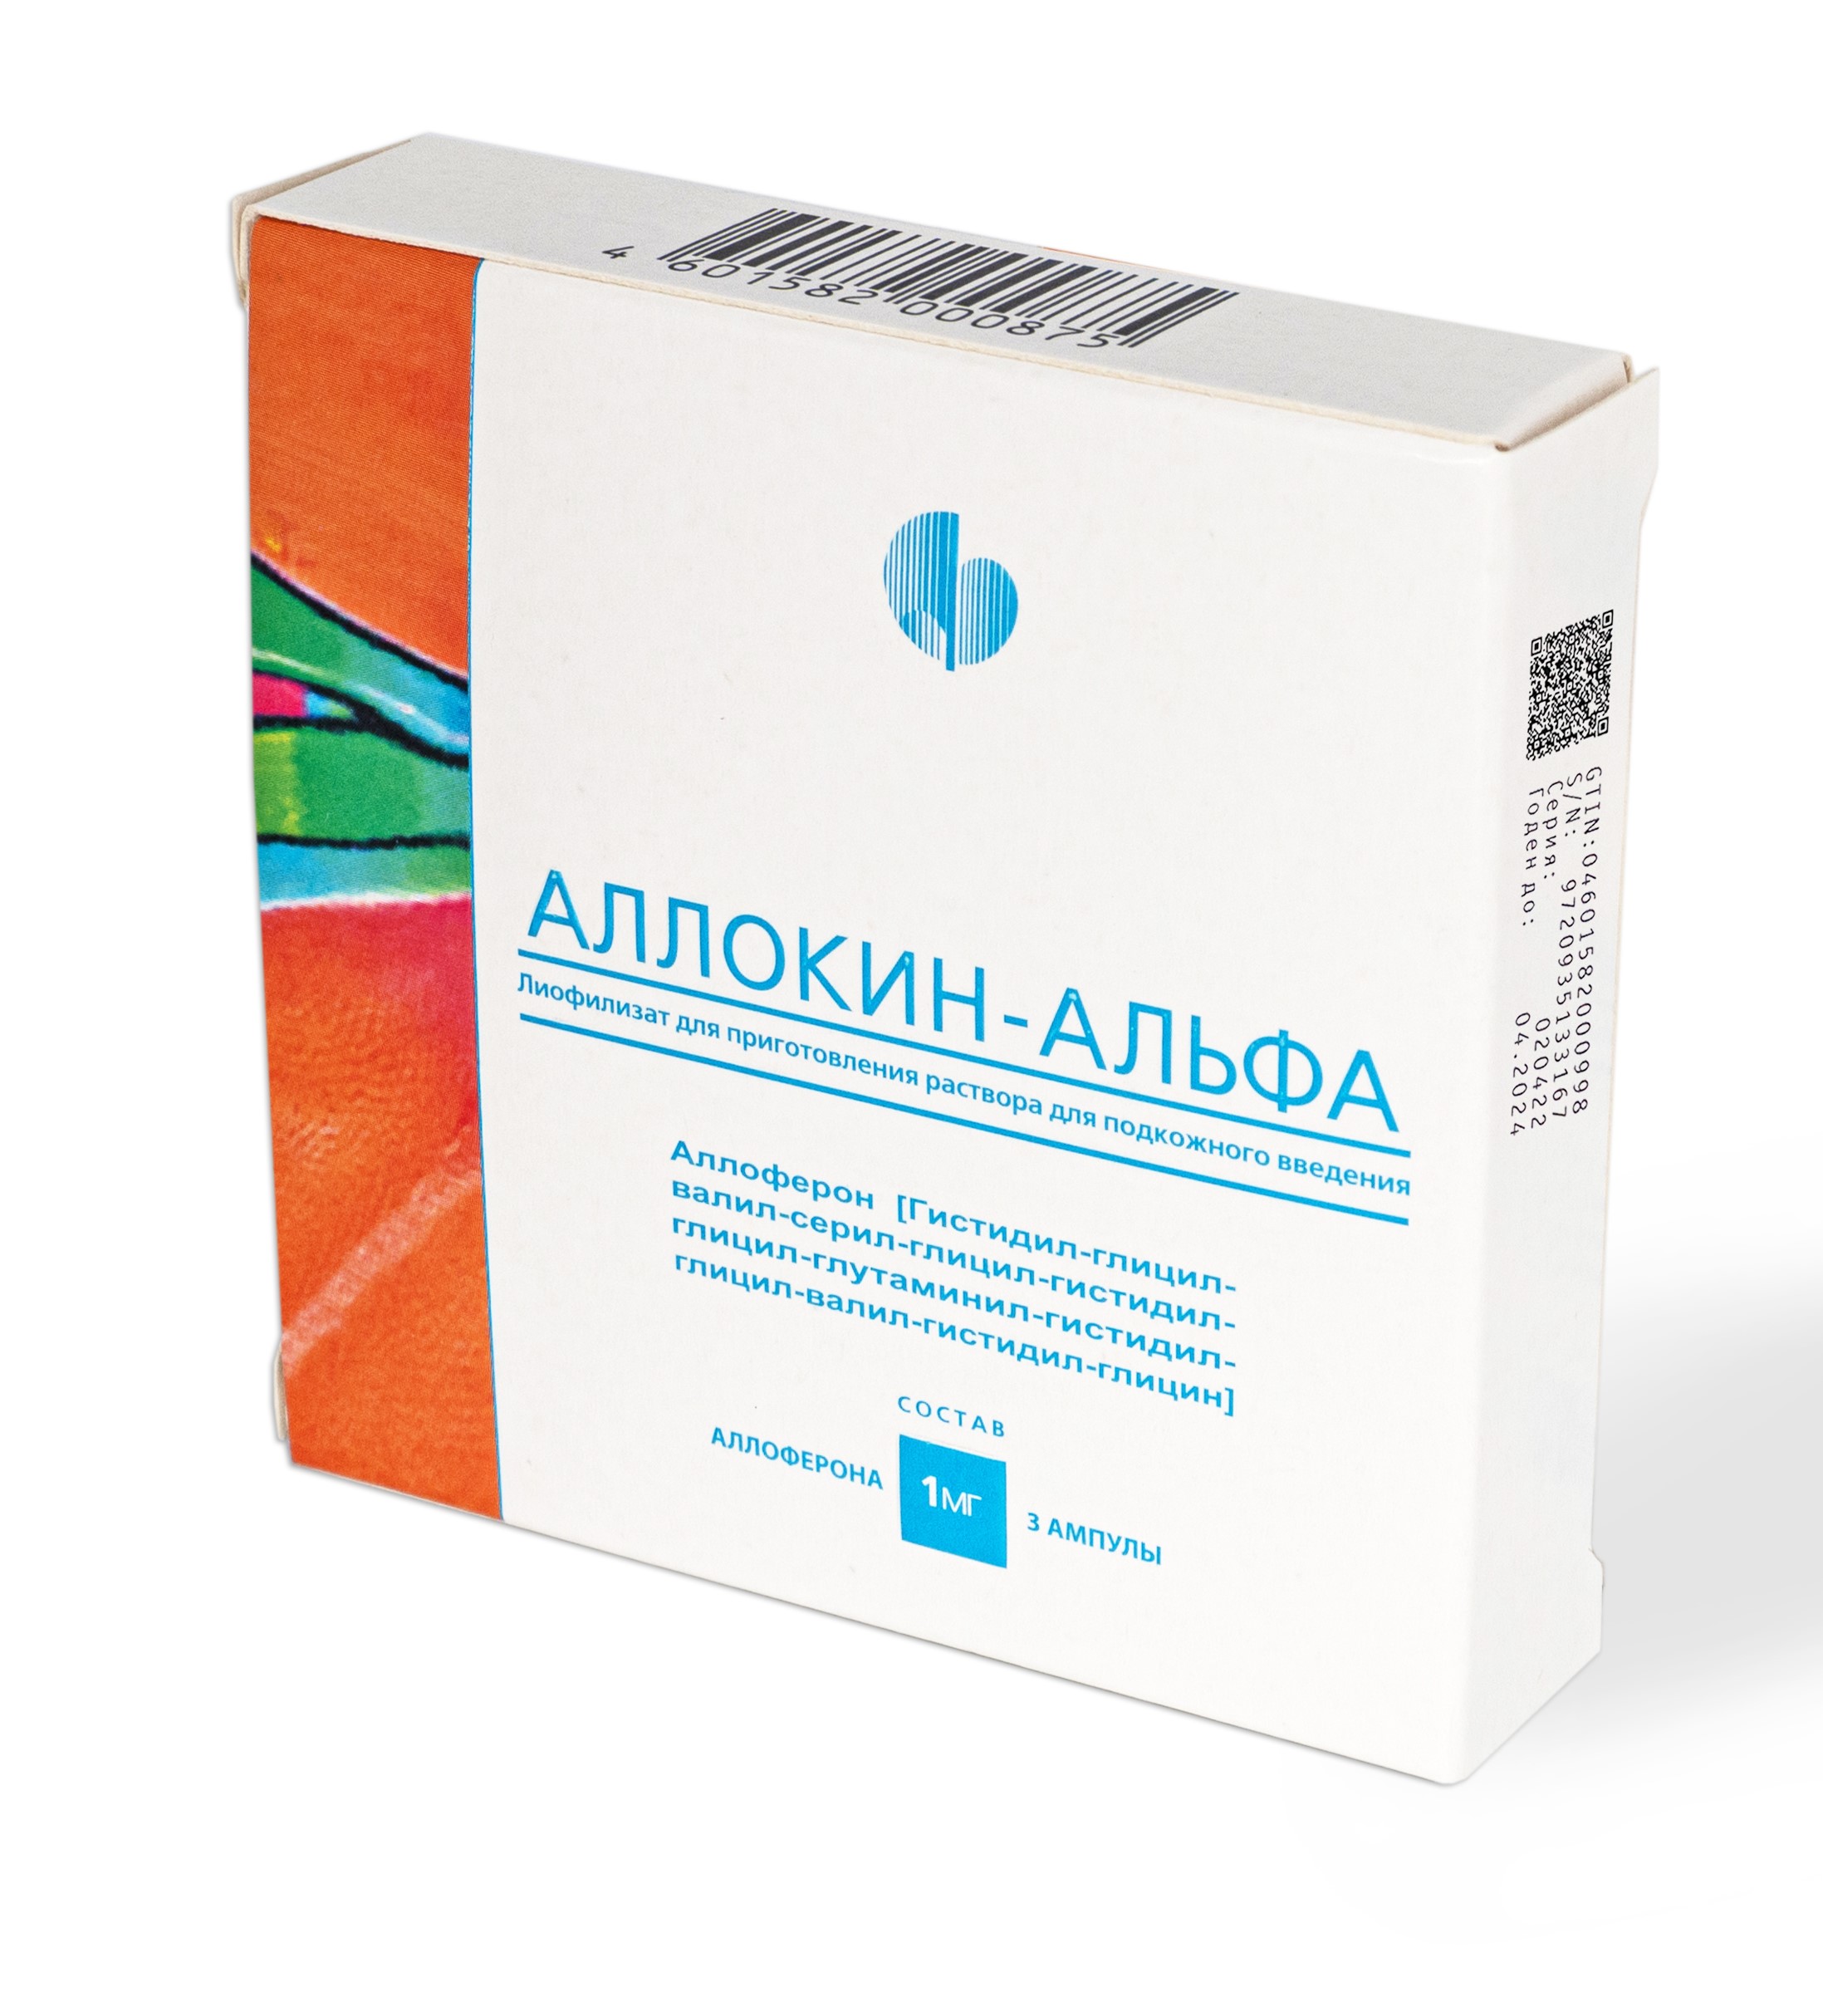 Аллокин-альфа фл 1 мг № 3